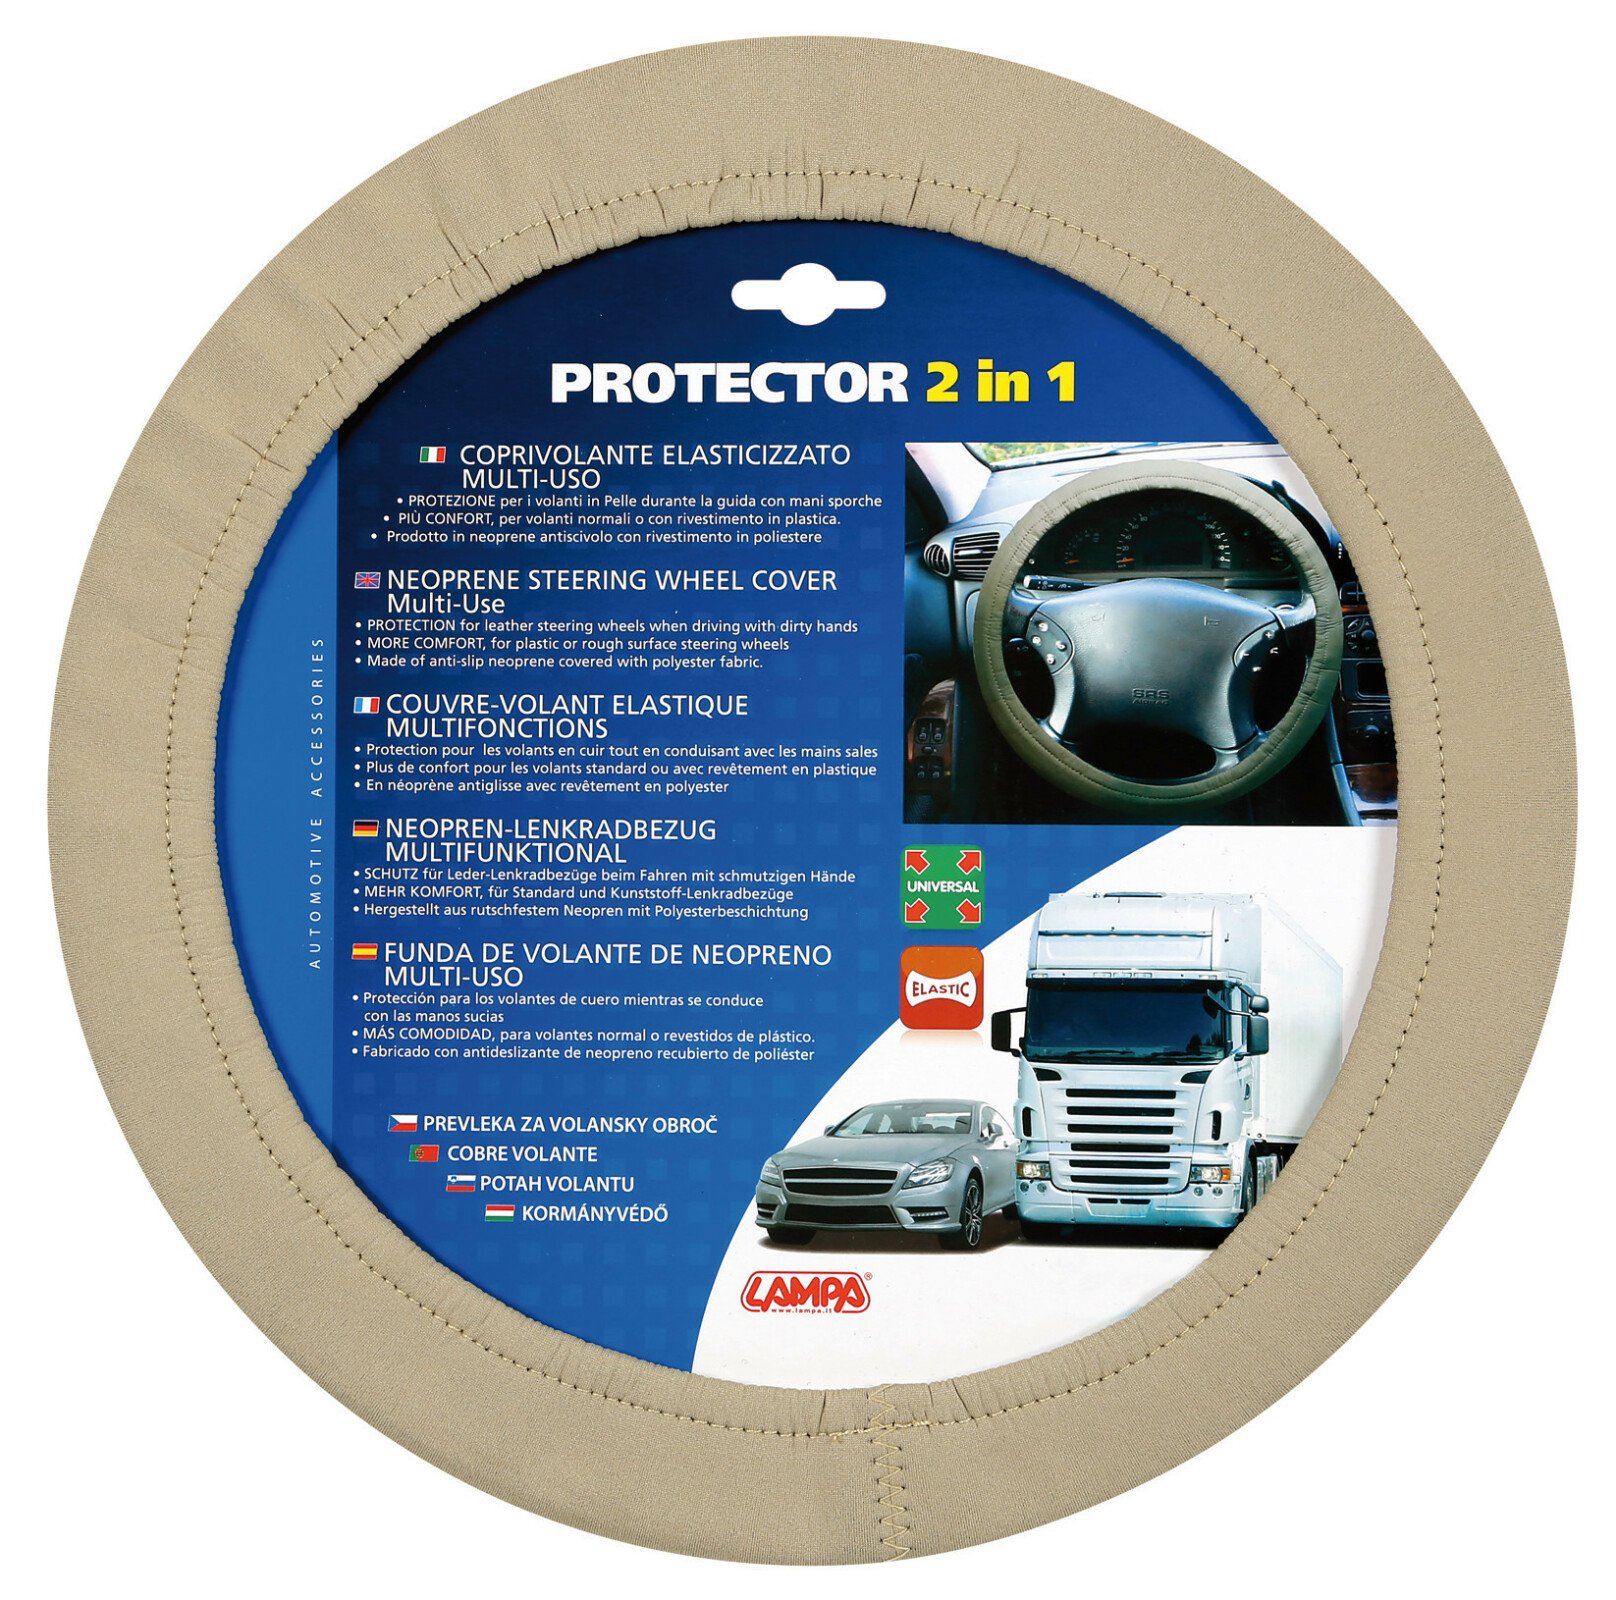 https://www.cridem.ro/media/catalog_products/h/u/husa-volan-protector-elasticizat-2-in-1-bej-561.jpg